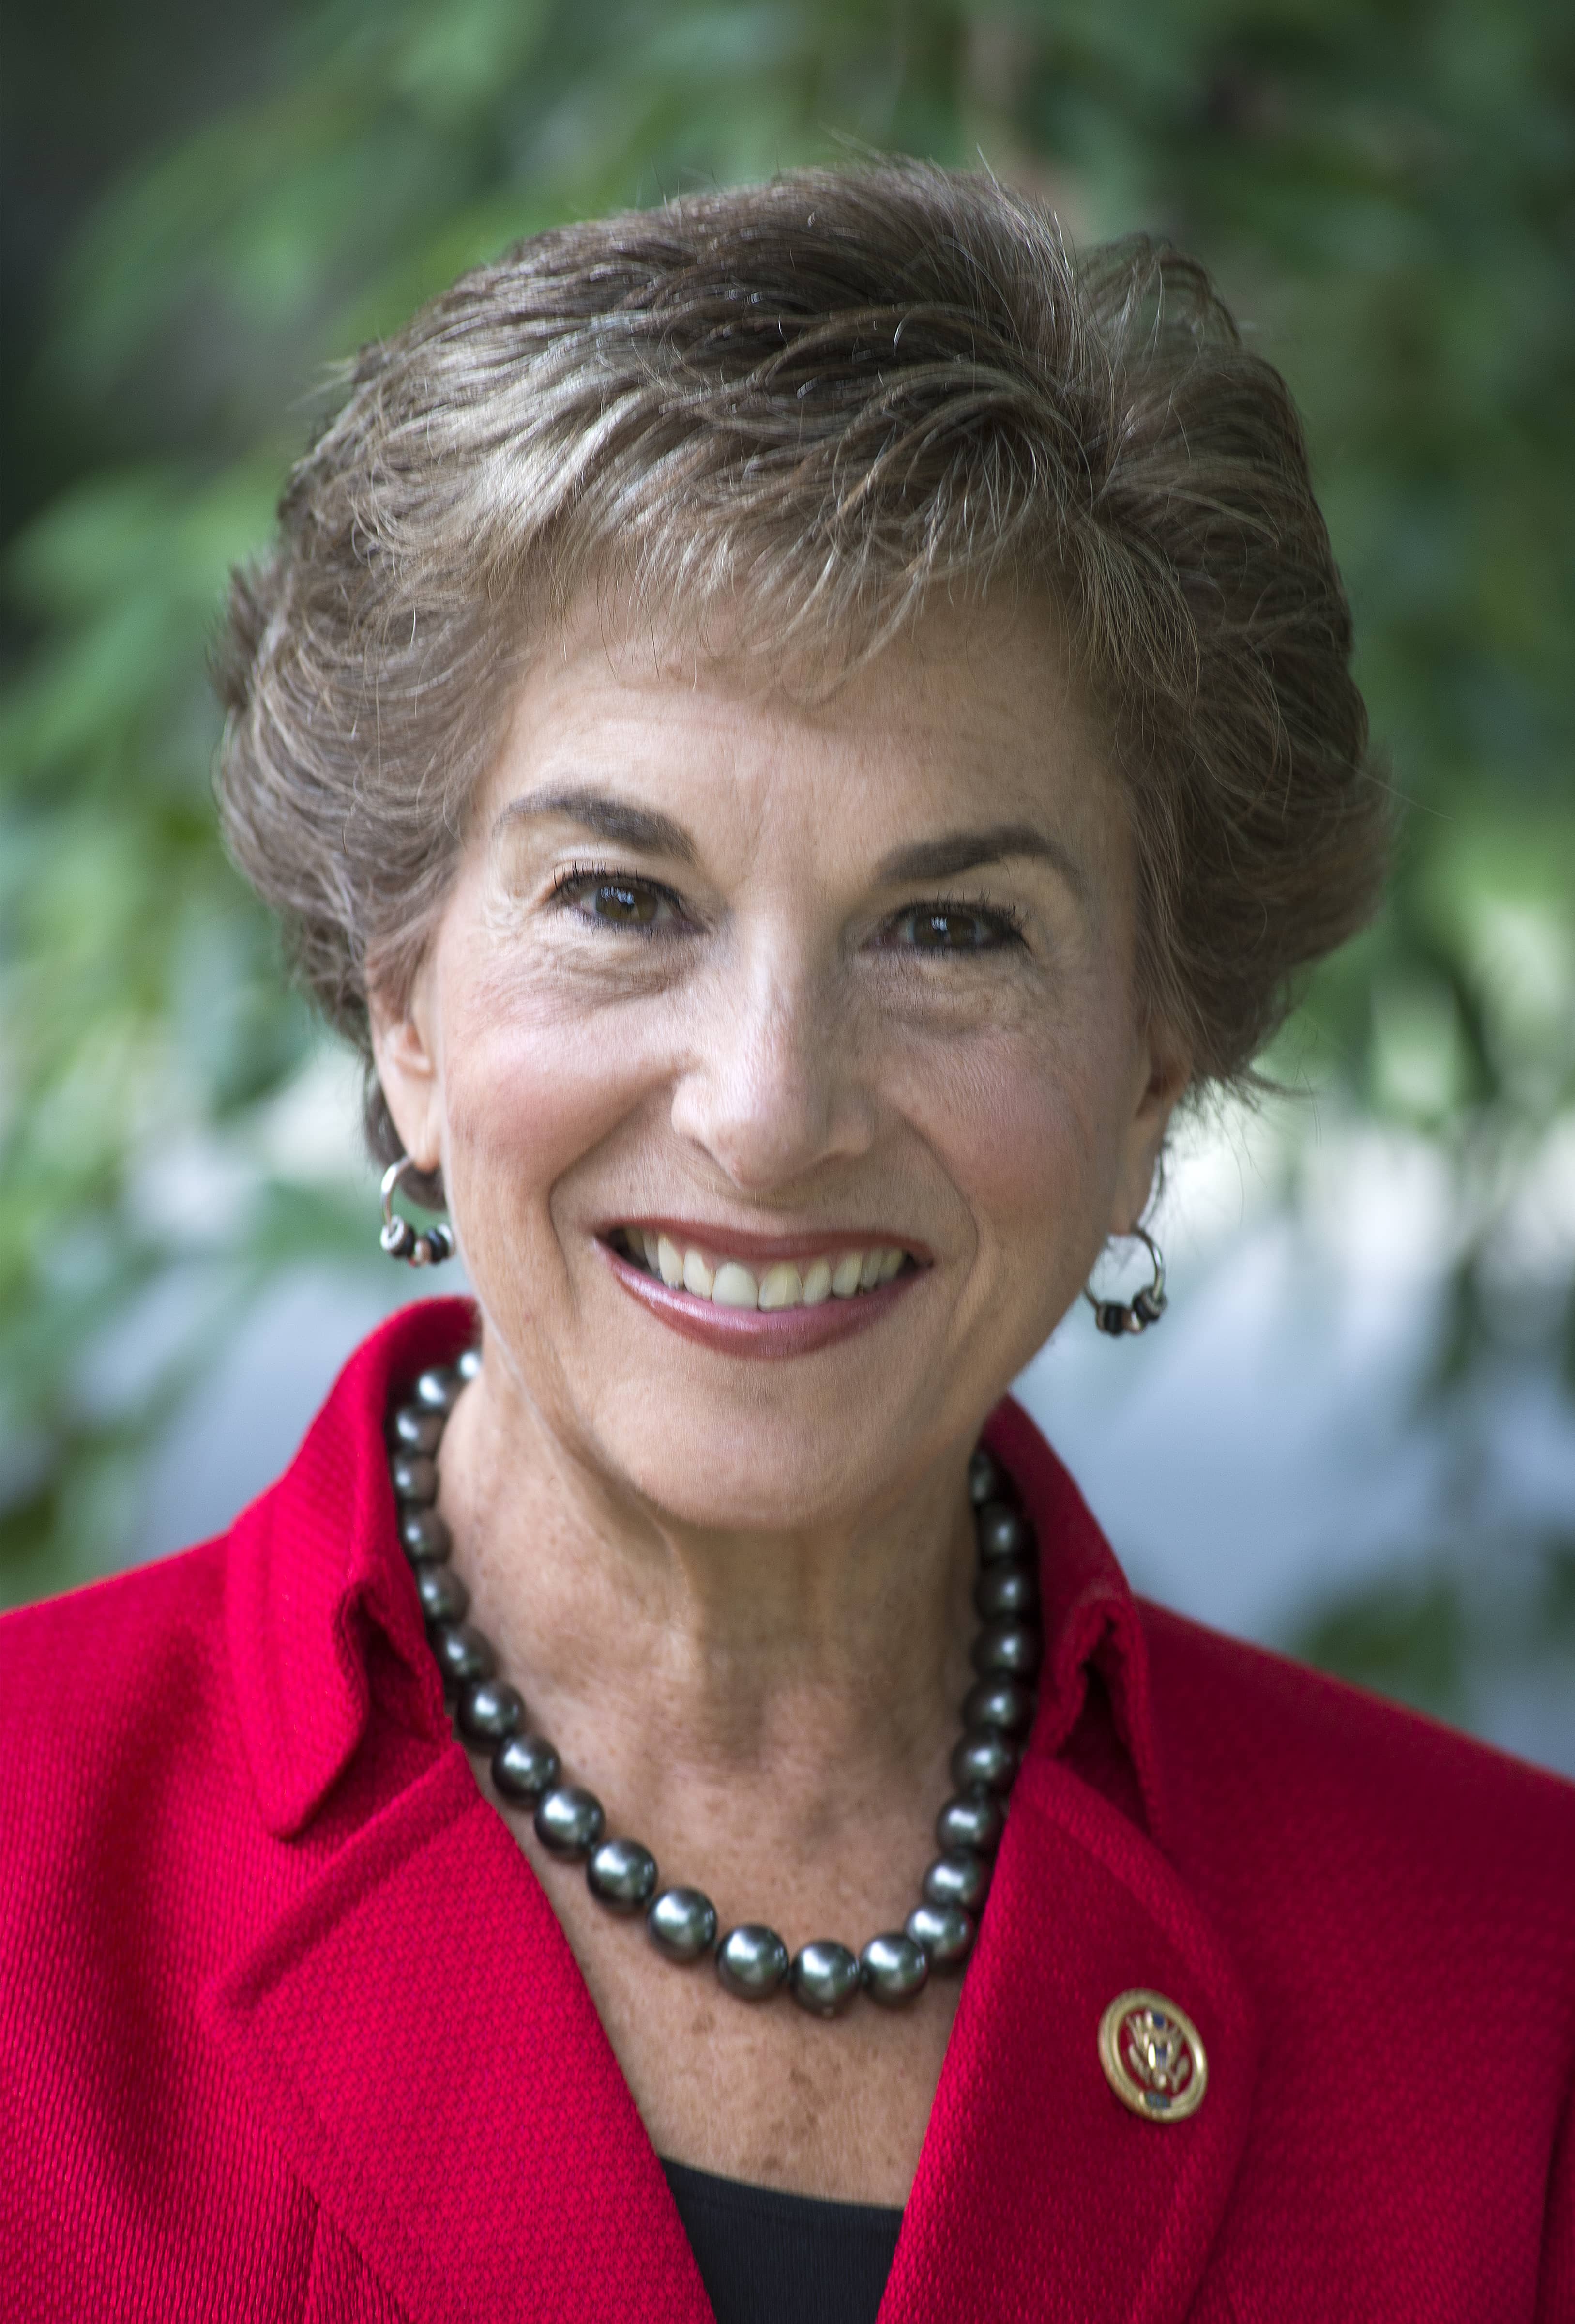 Image of Schakowsky, Janice D., U.S. House of Representatives, Democratic Party, Illinois